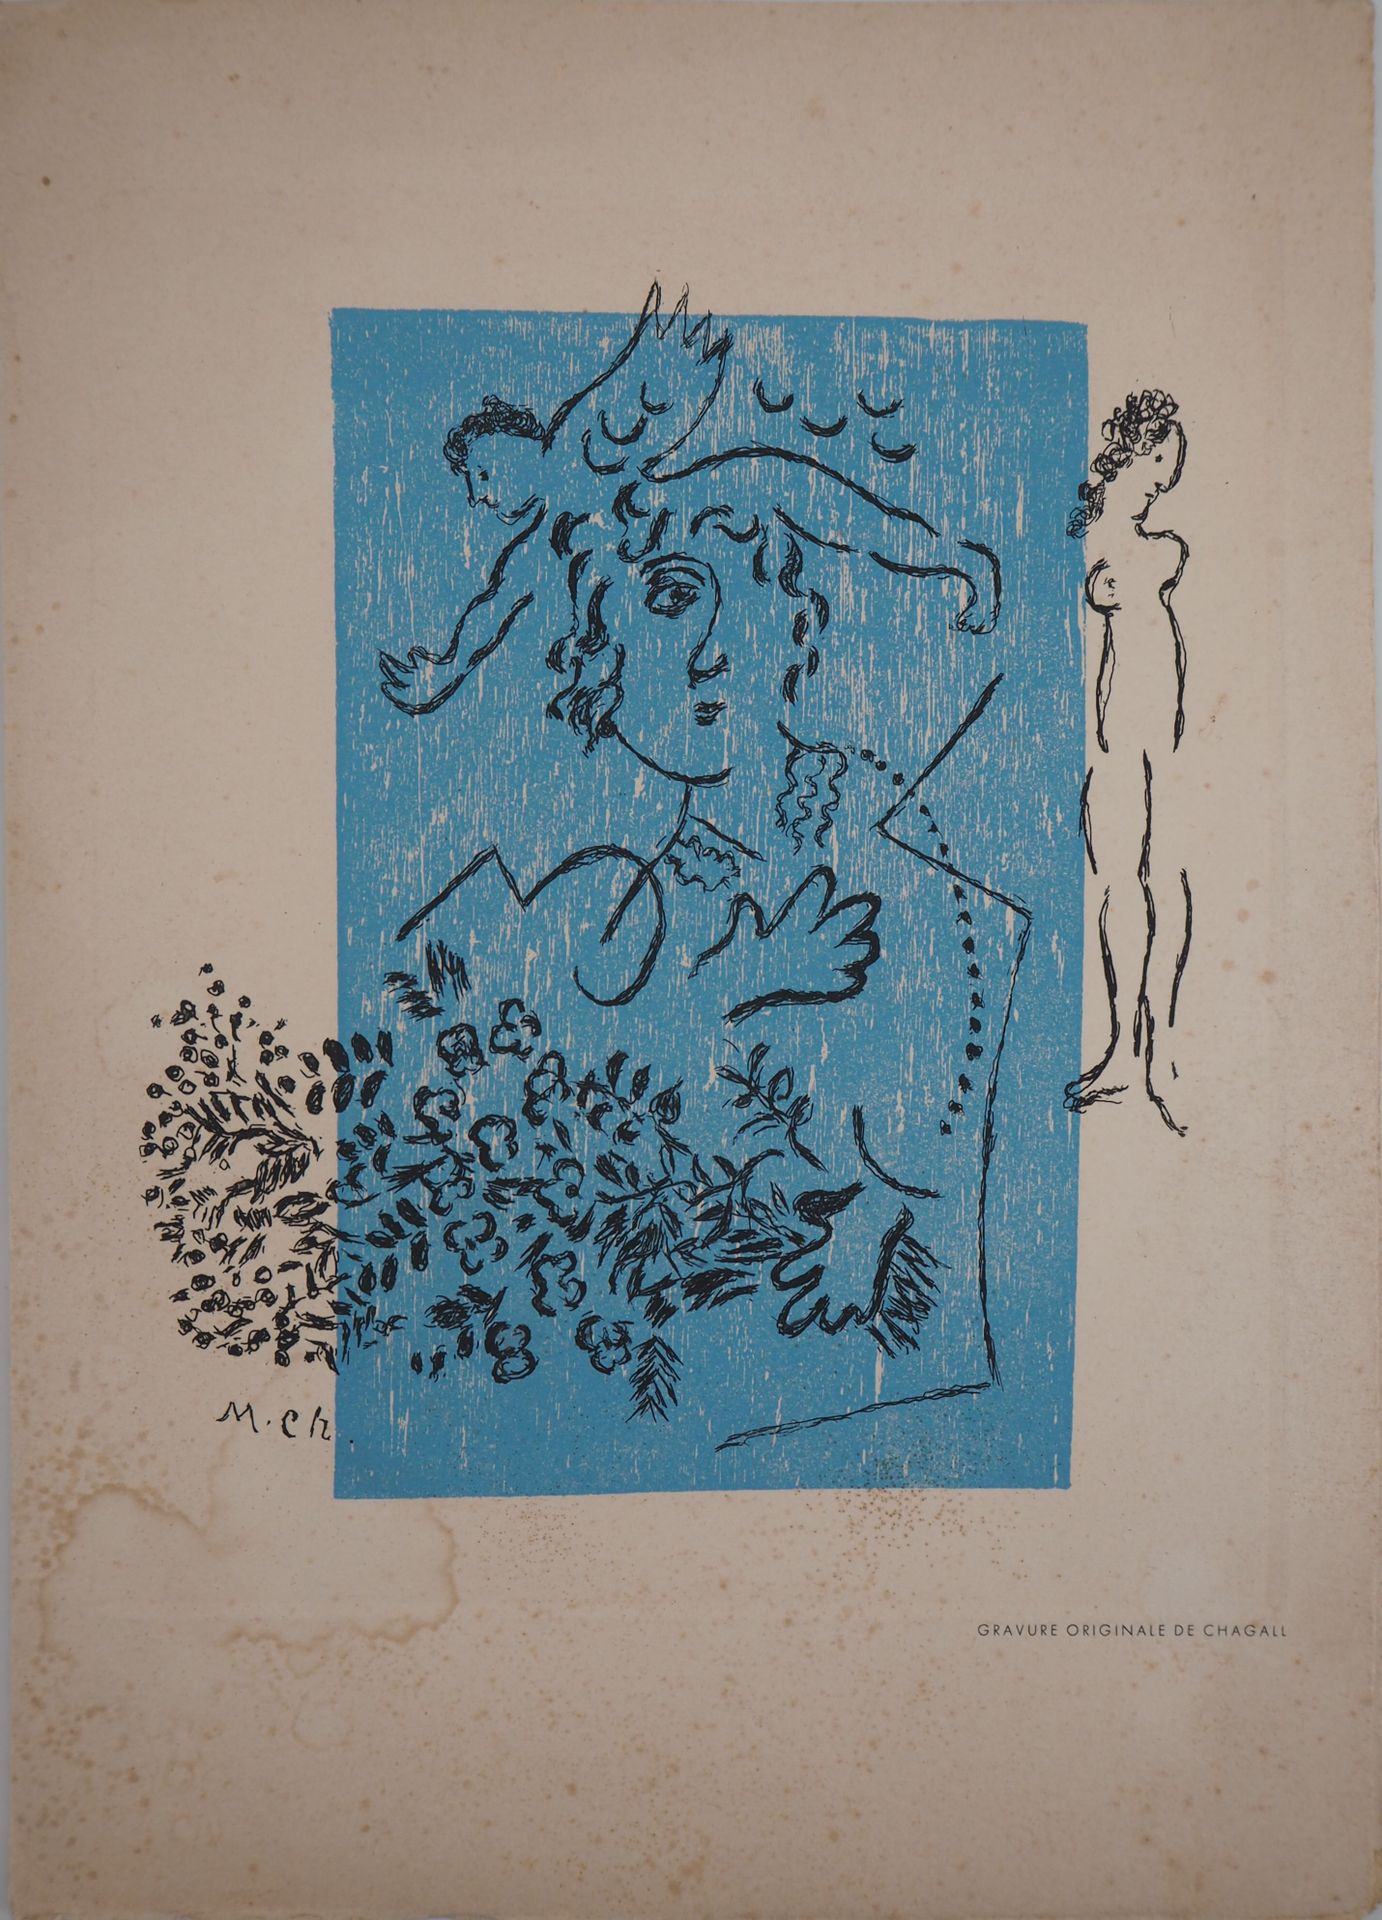 Marc Chagall 马克-夏加尔 (1887-1985)

艾梅-梅格特的誓言, 1963年

原创木刻版画

板块中的签名

在Arches编织纸上26&hellip;